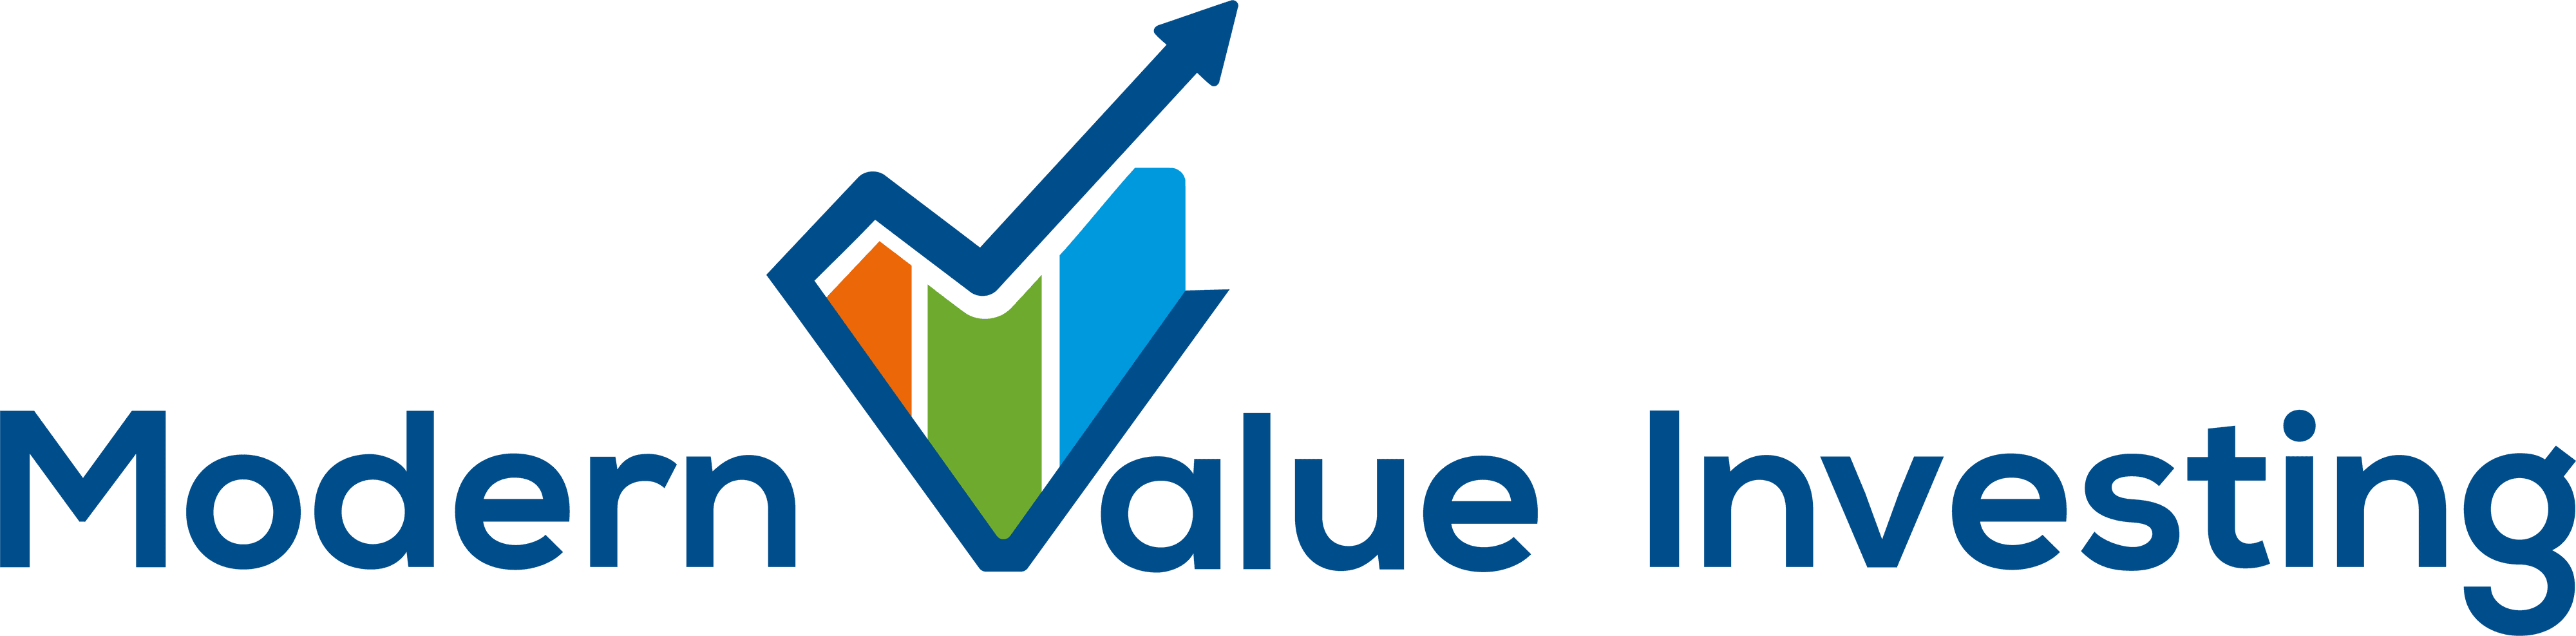 modern_value_investing bannière